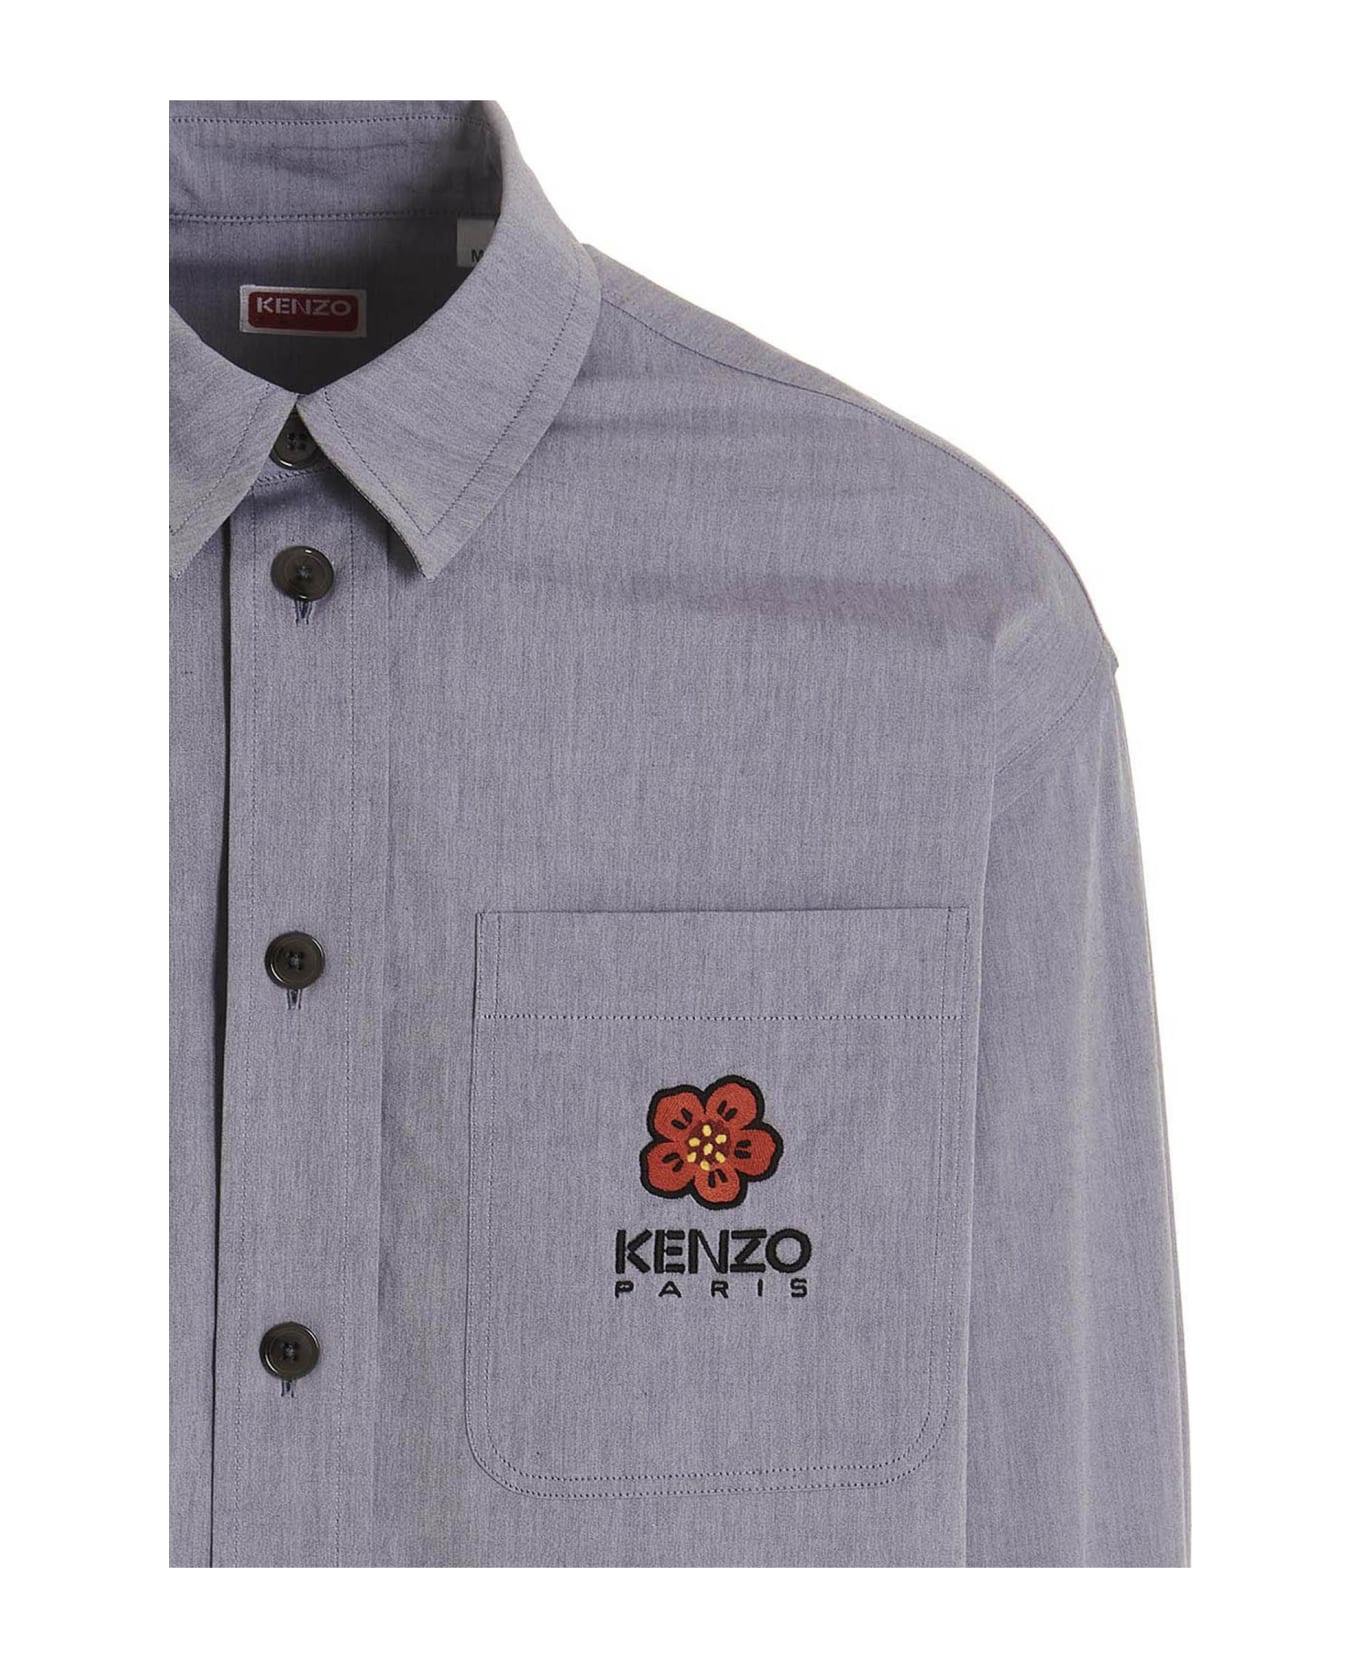 Kenzo Logo Embroidery Shirt - Light Blue